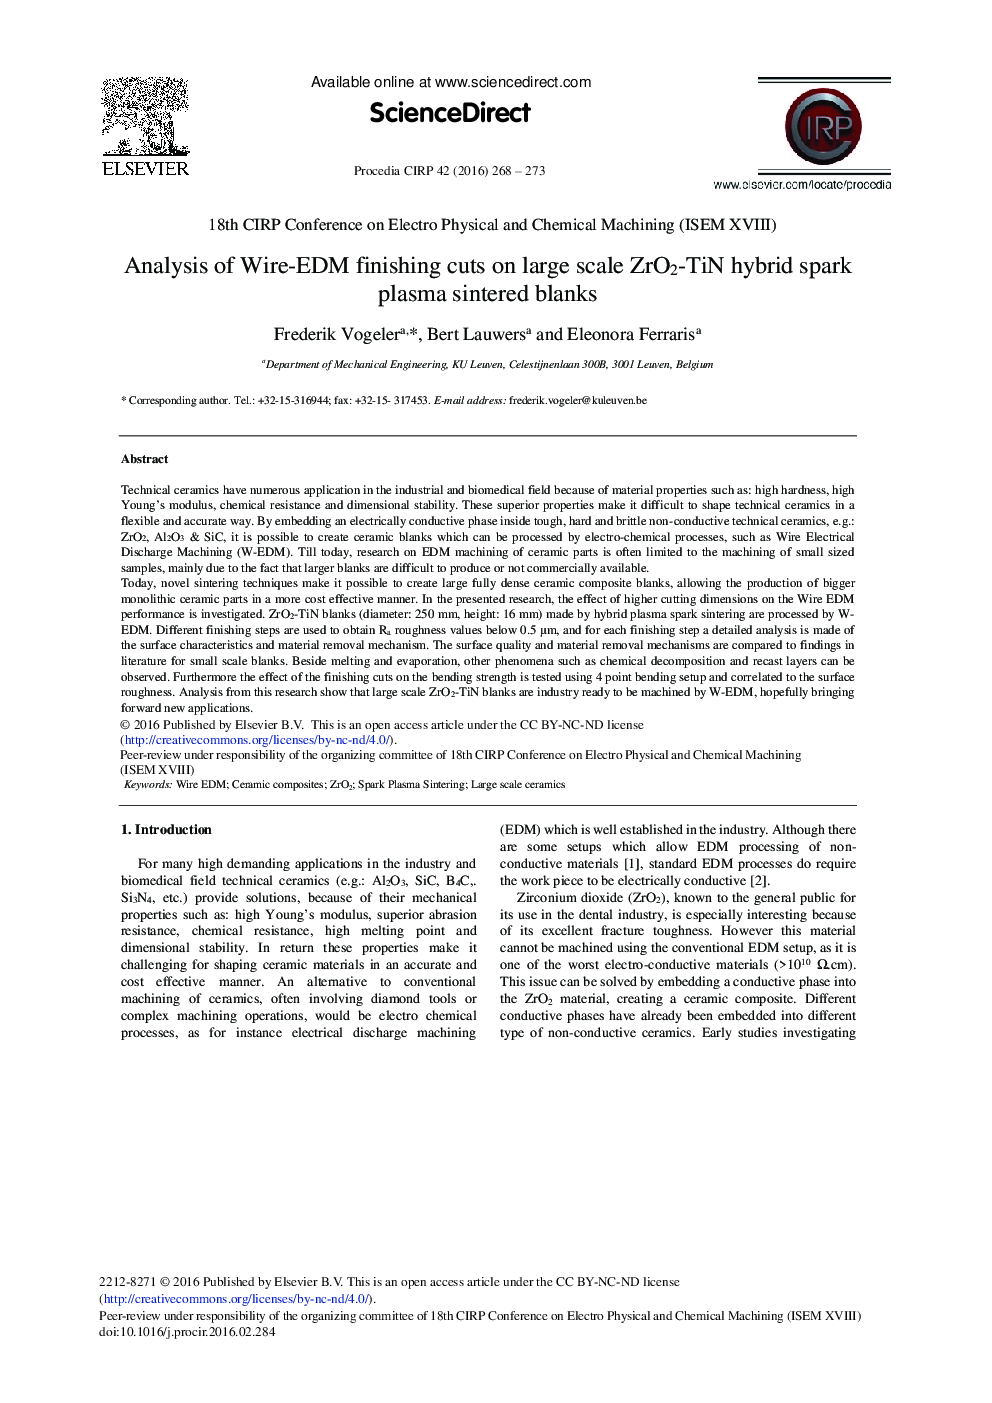 Analysis of Wire-EDM Finishing Cuts on Large Scale ZrO2-TiN Hybrid Spark Plasma Sintered Blanks 